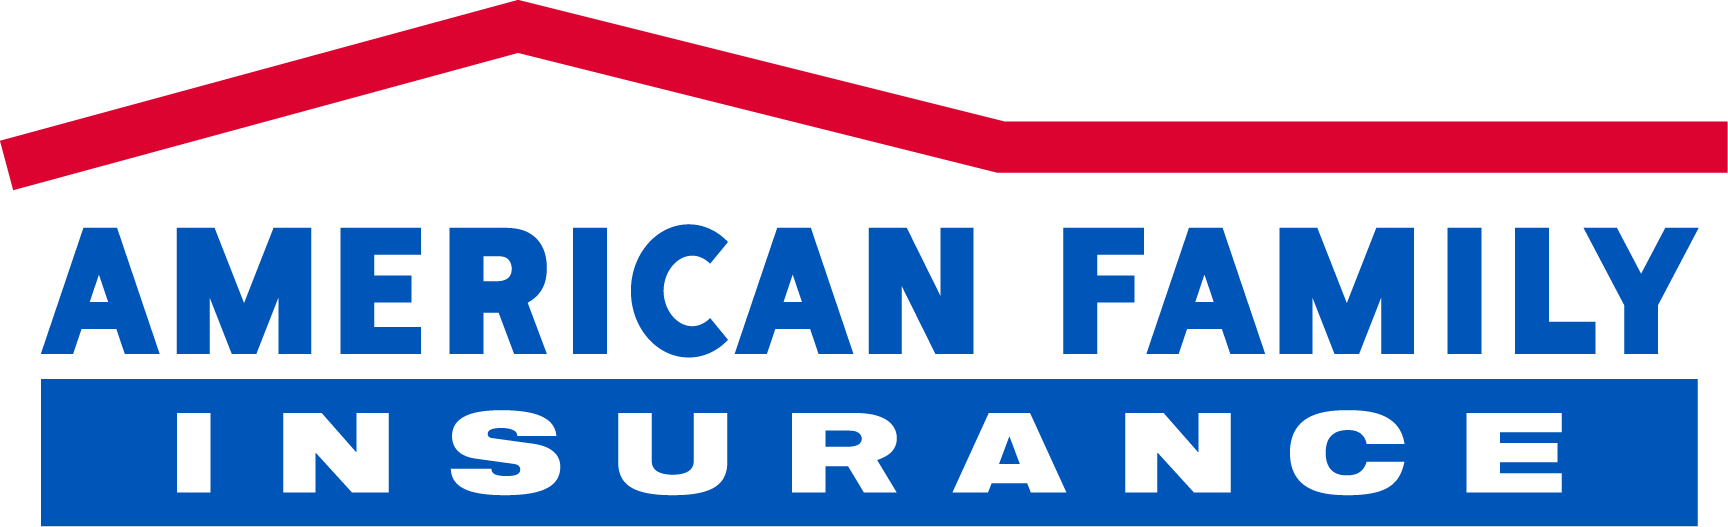 American Family Insurance Umbrella Logo - American Family Insurance Quotes for Auto, Home, Life and More ...